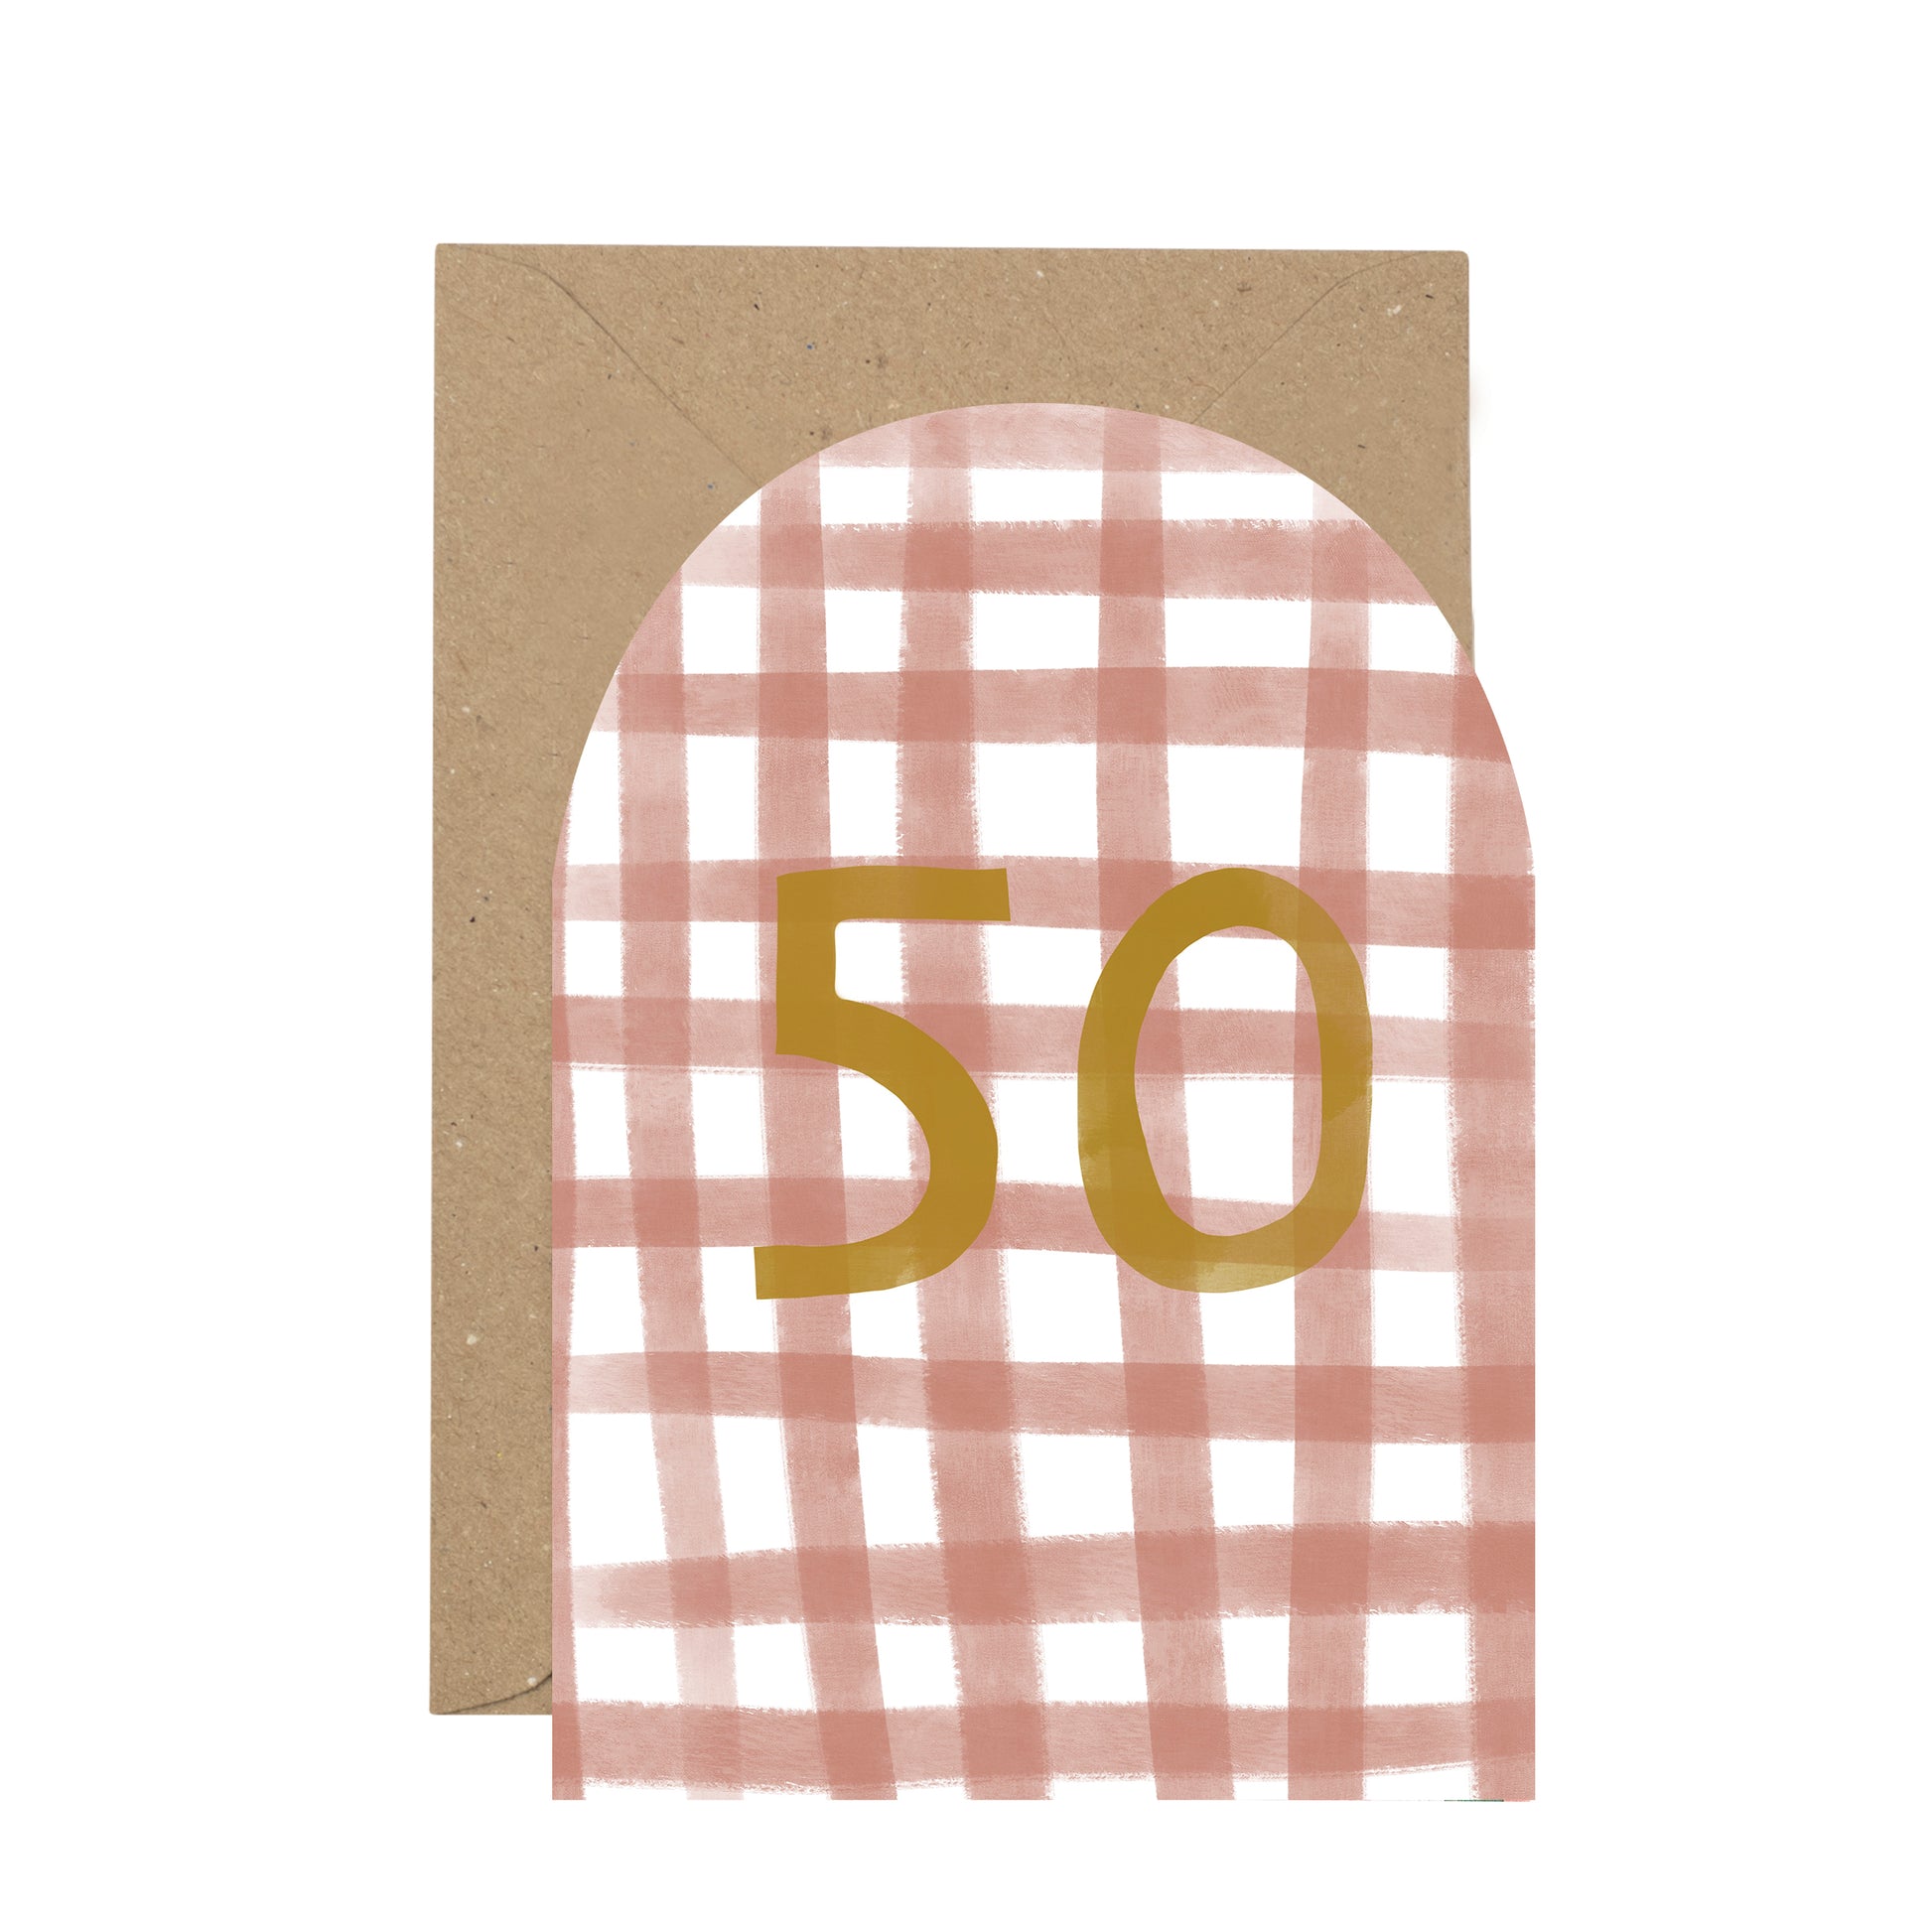 50th-birthday-card